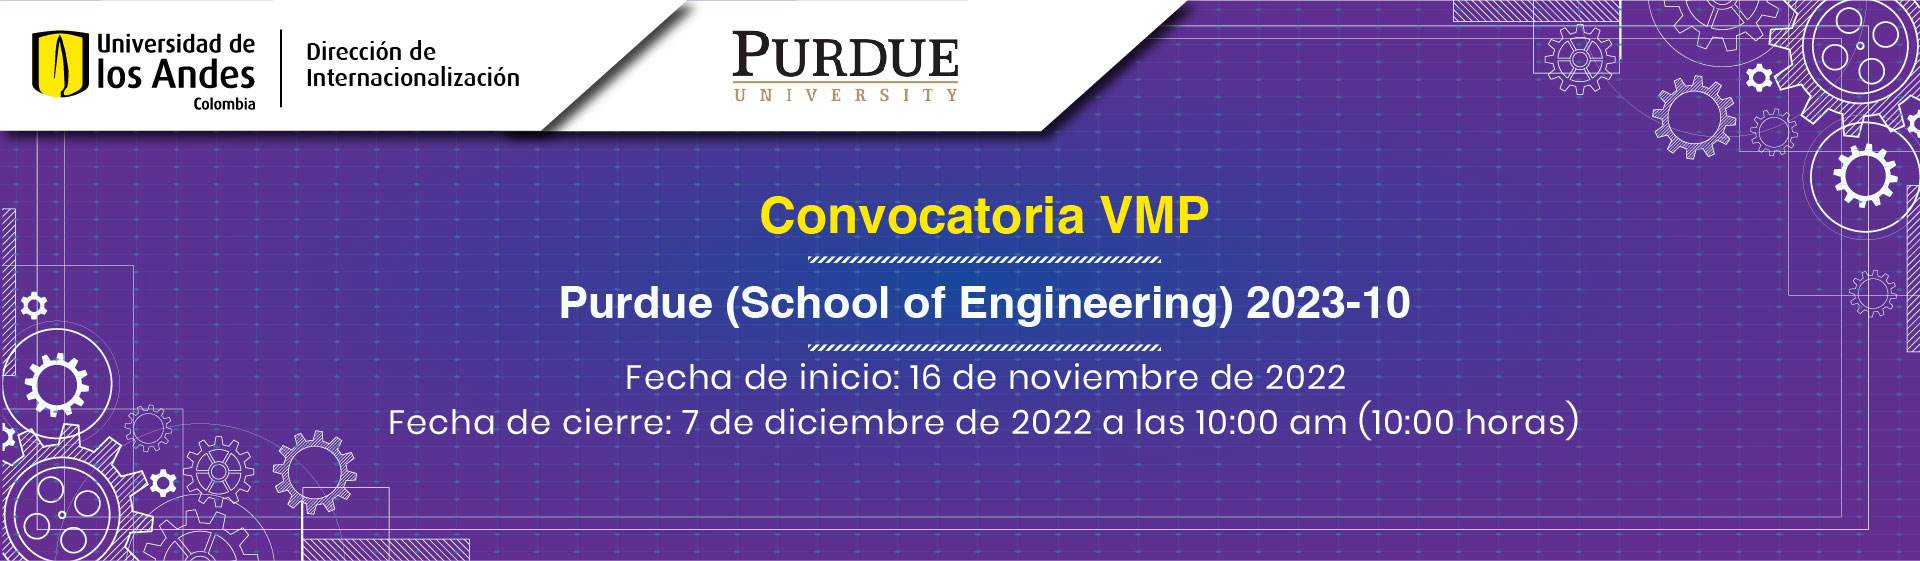 Convocatoria VMP Purdue (School of Engineering) 2023-10